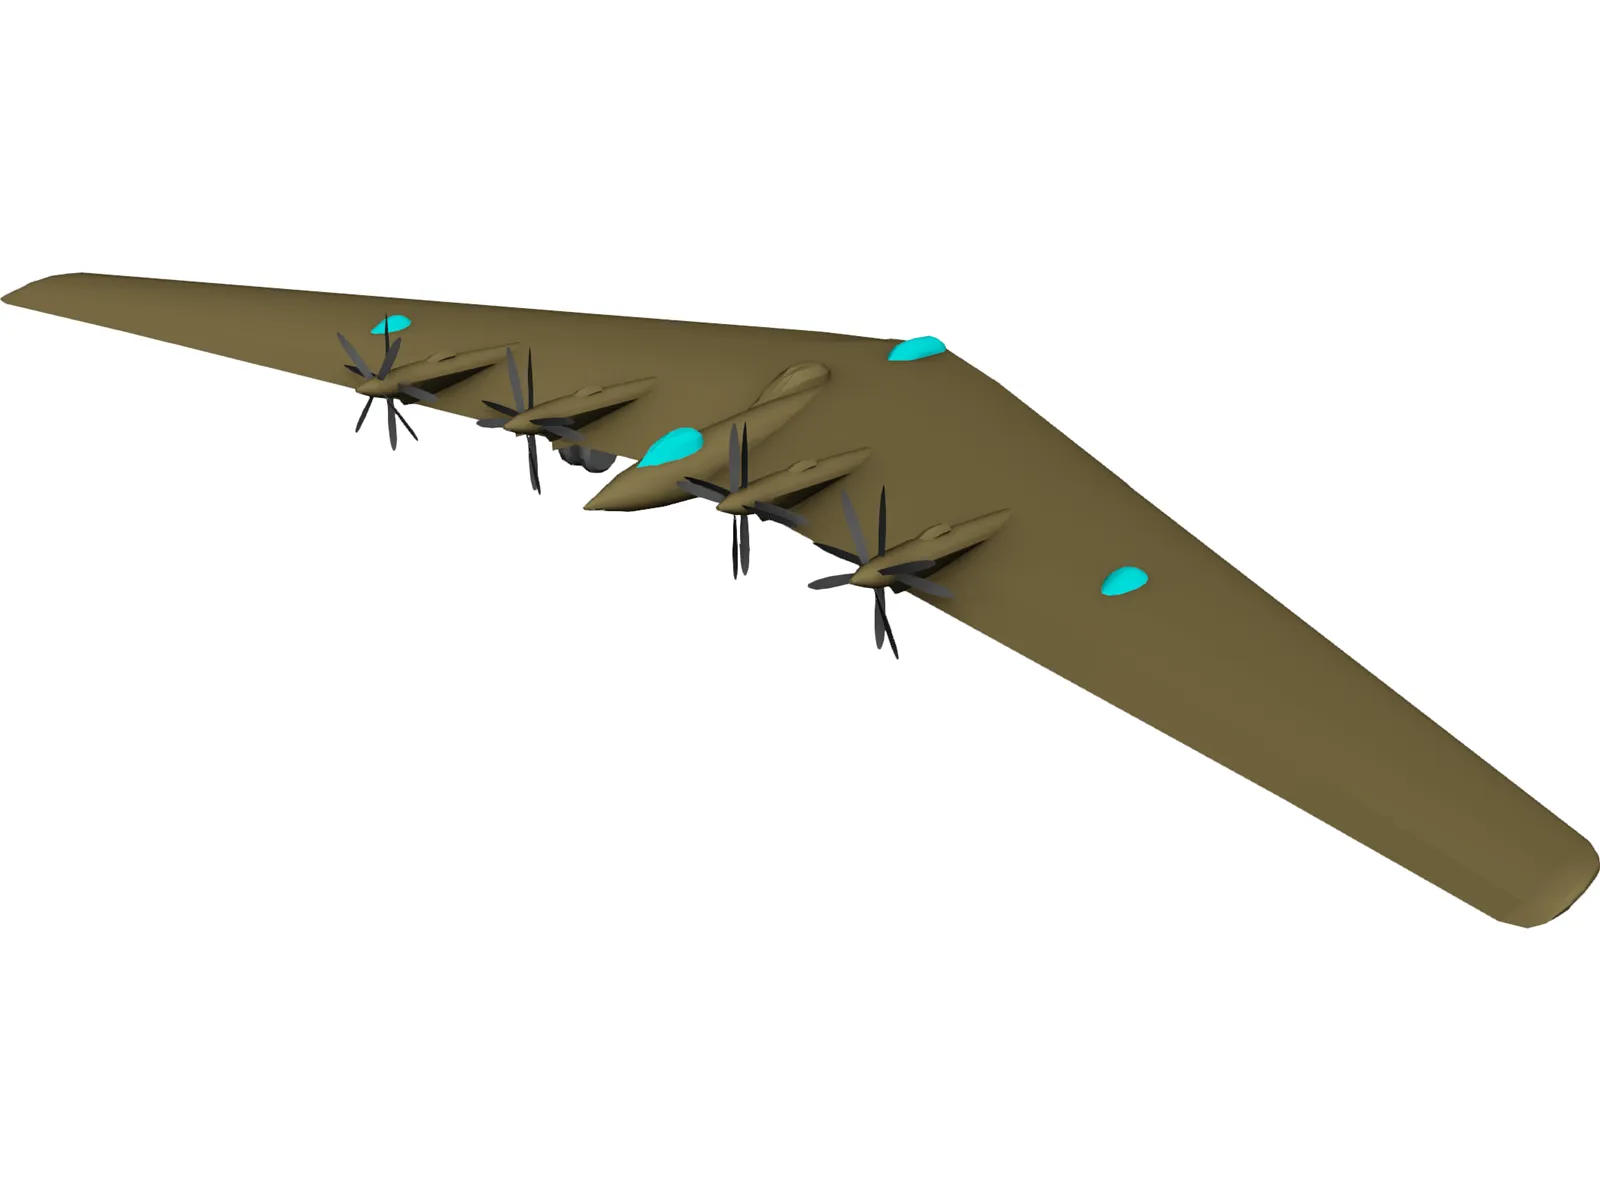 Northrop XB-35 Flying Wing 3D Model